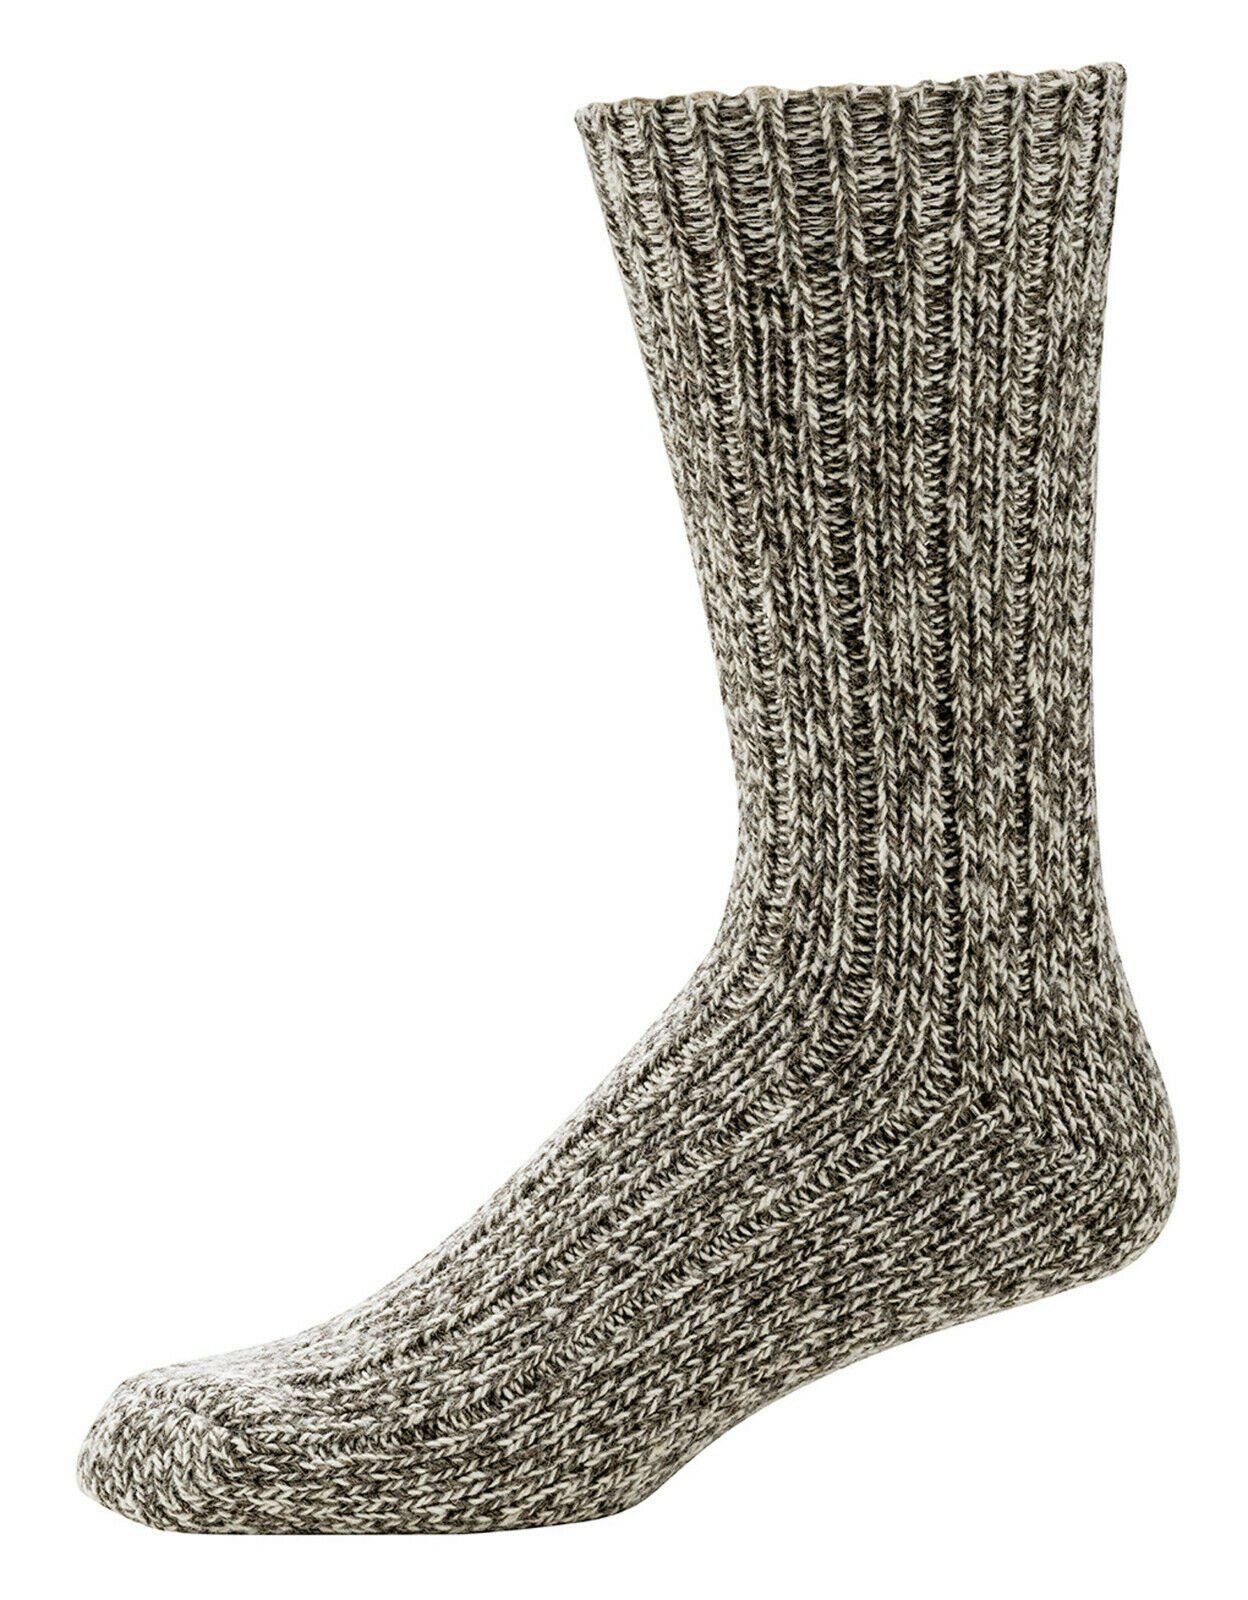 Wolle Norwegersocken (3 Socken Norweger Wowerat Warme Paar) weiche Viskose Baumwolle mit